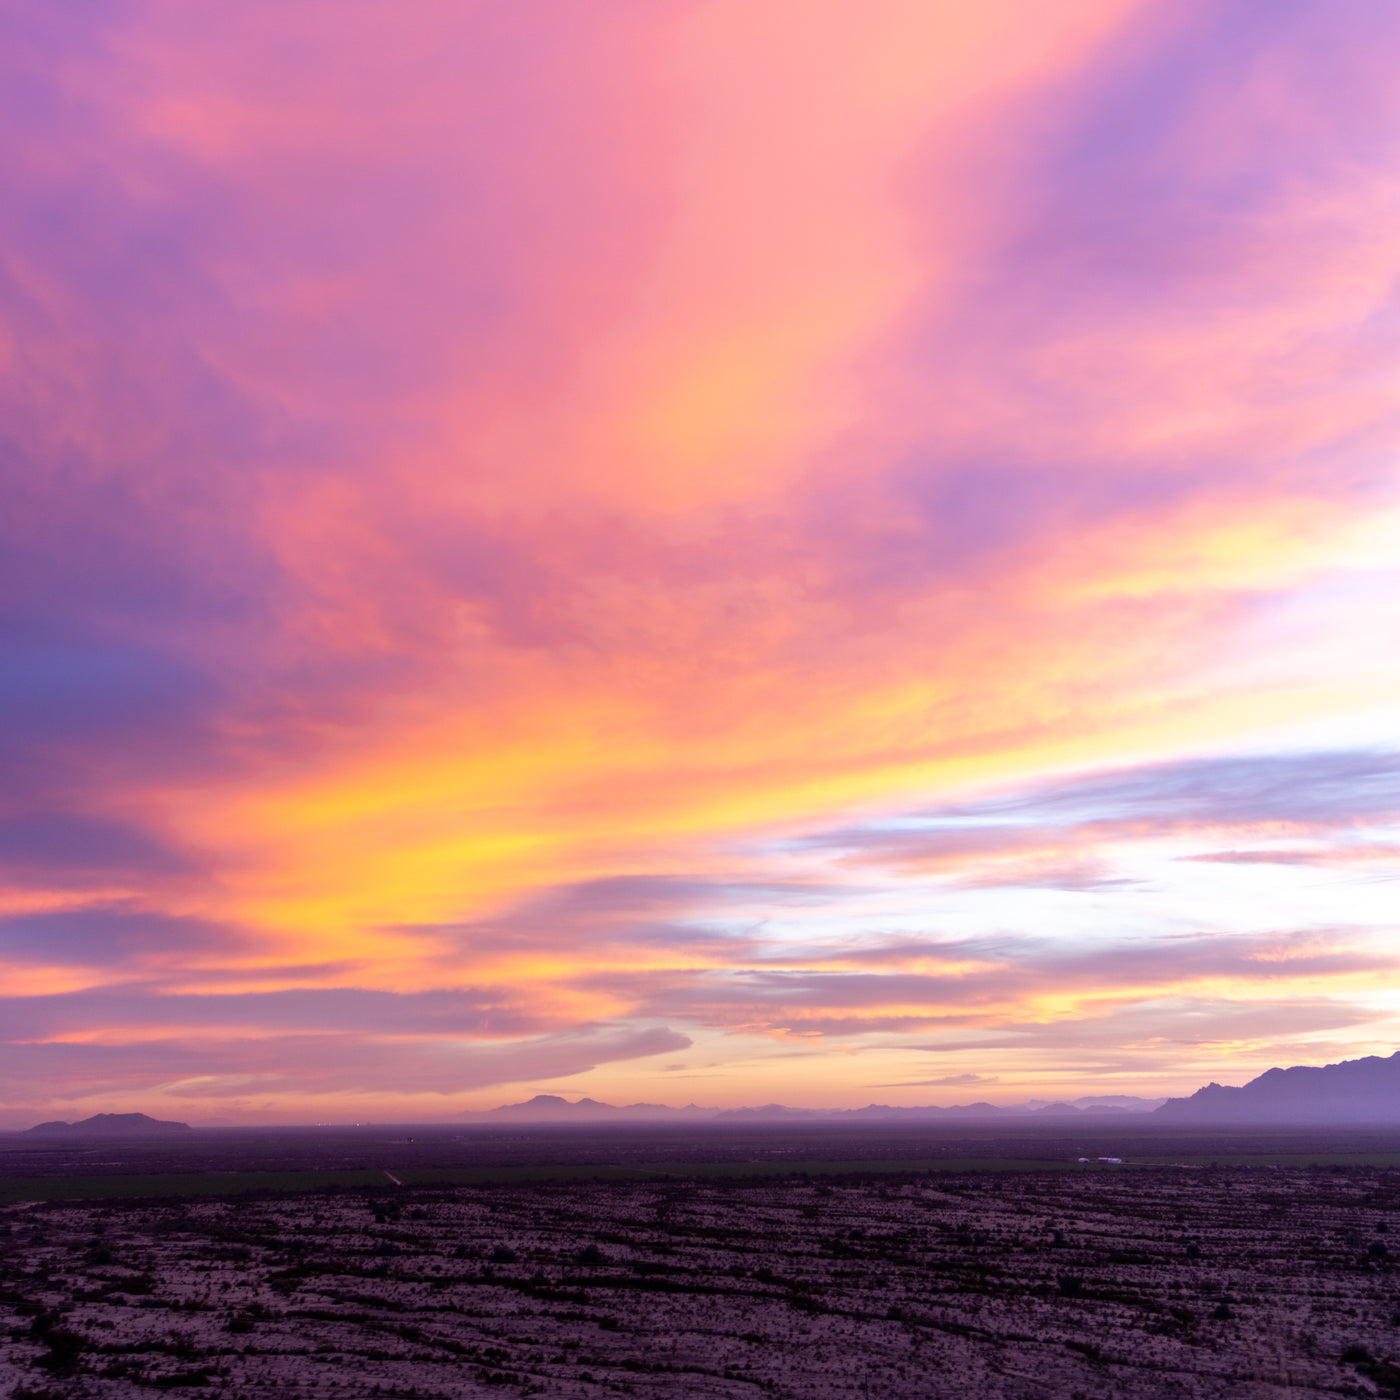 Pink sunset in the desert